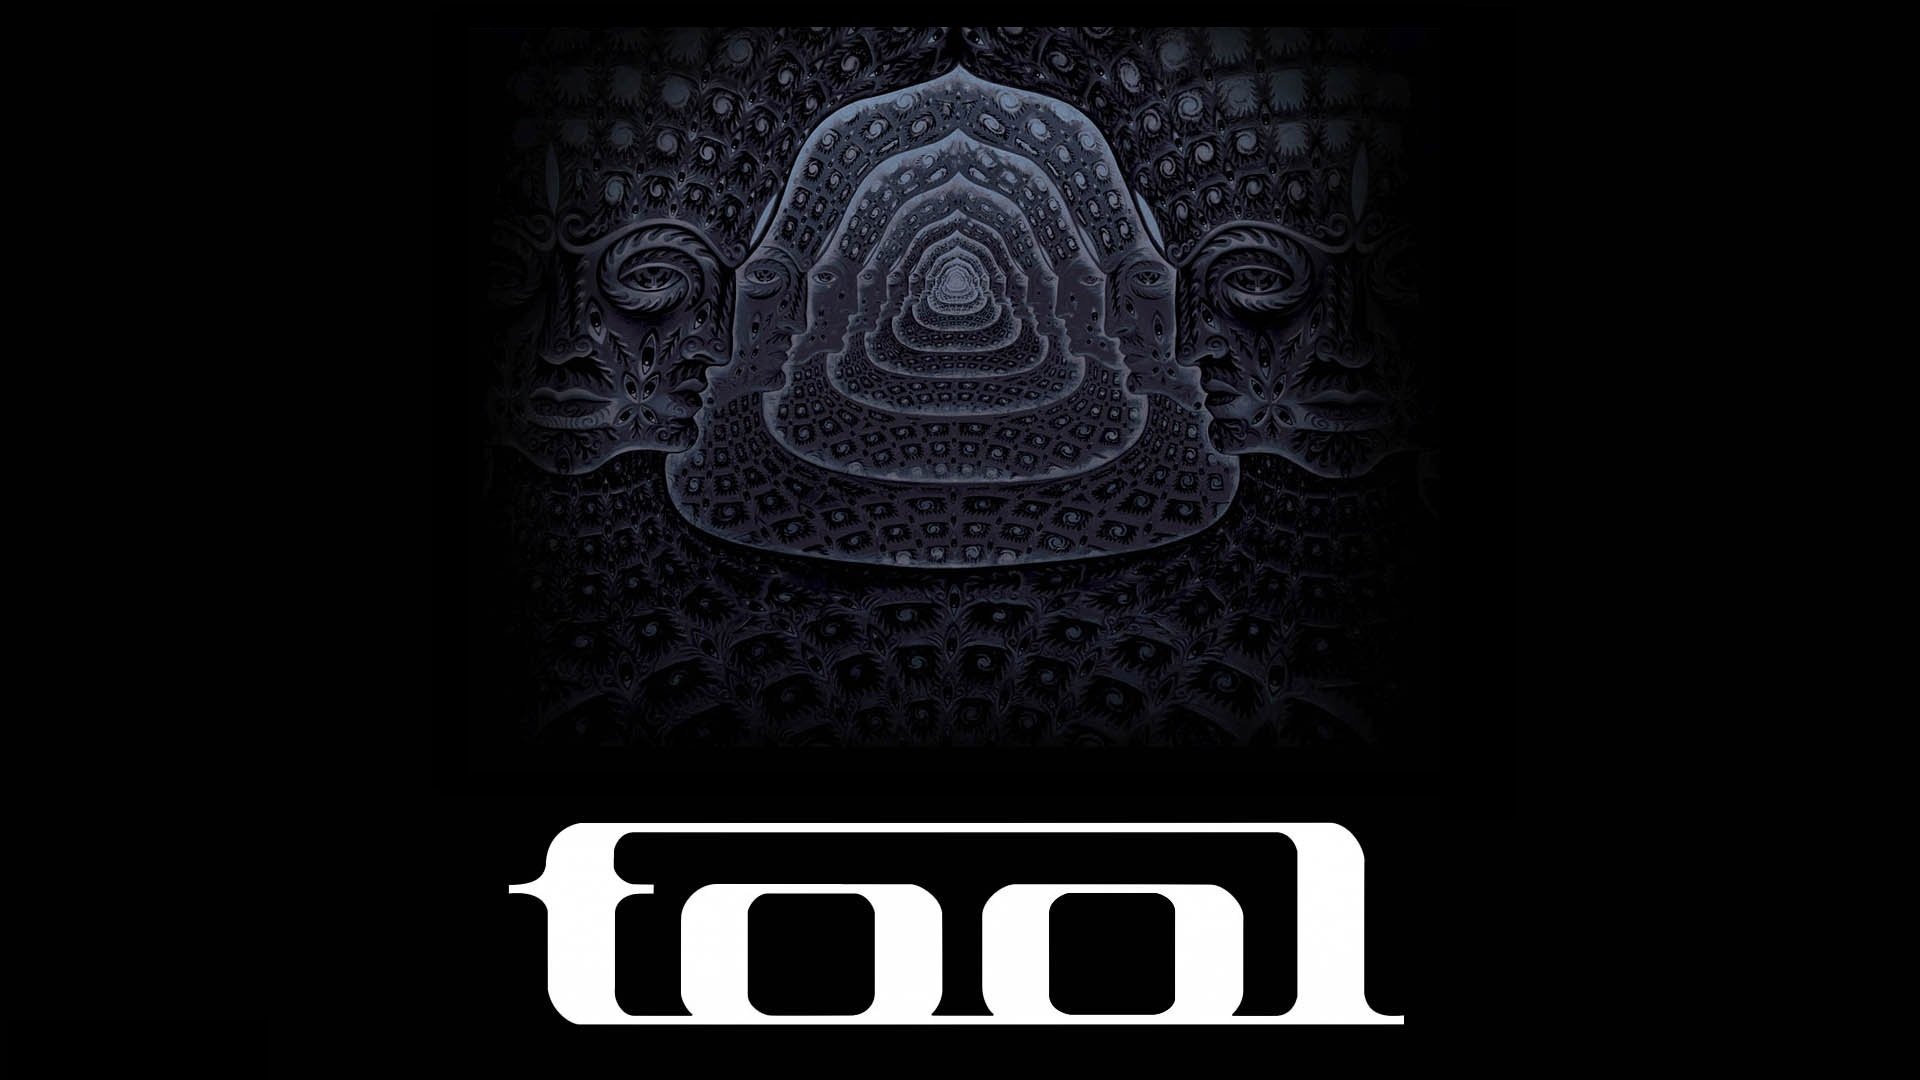 tool, Alternative, Metal, Rock, Nu metal Wallpaper